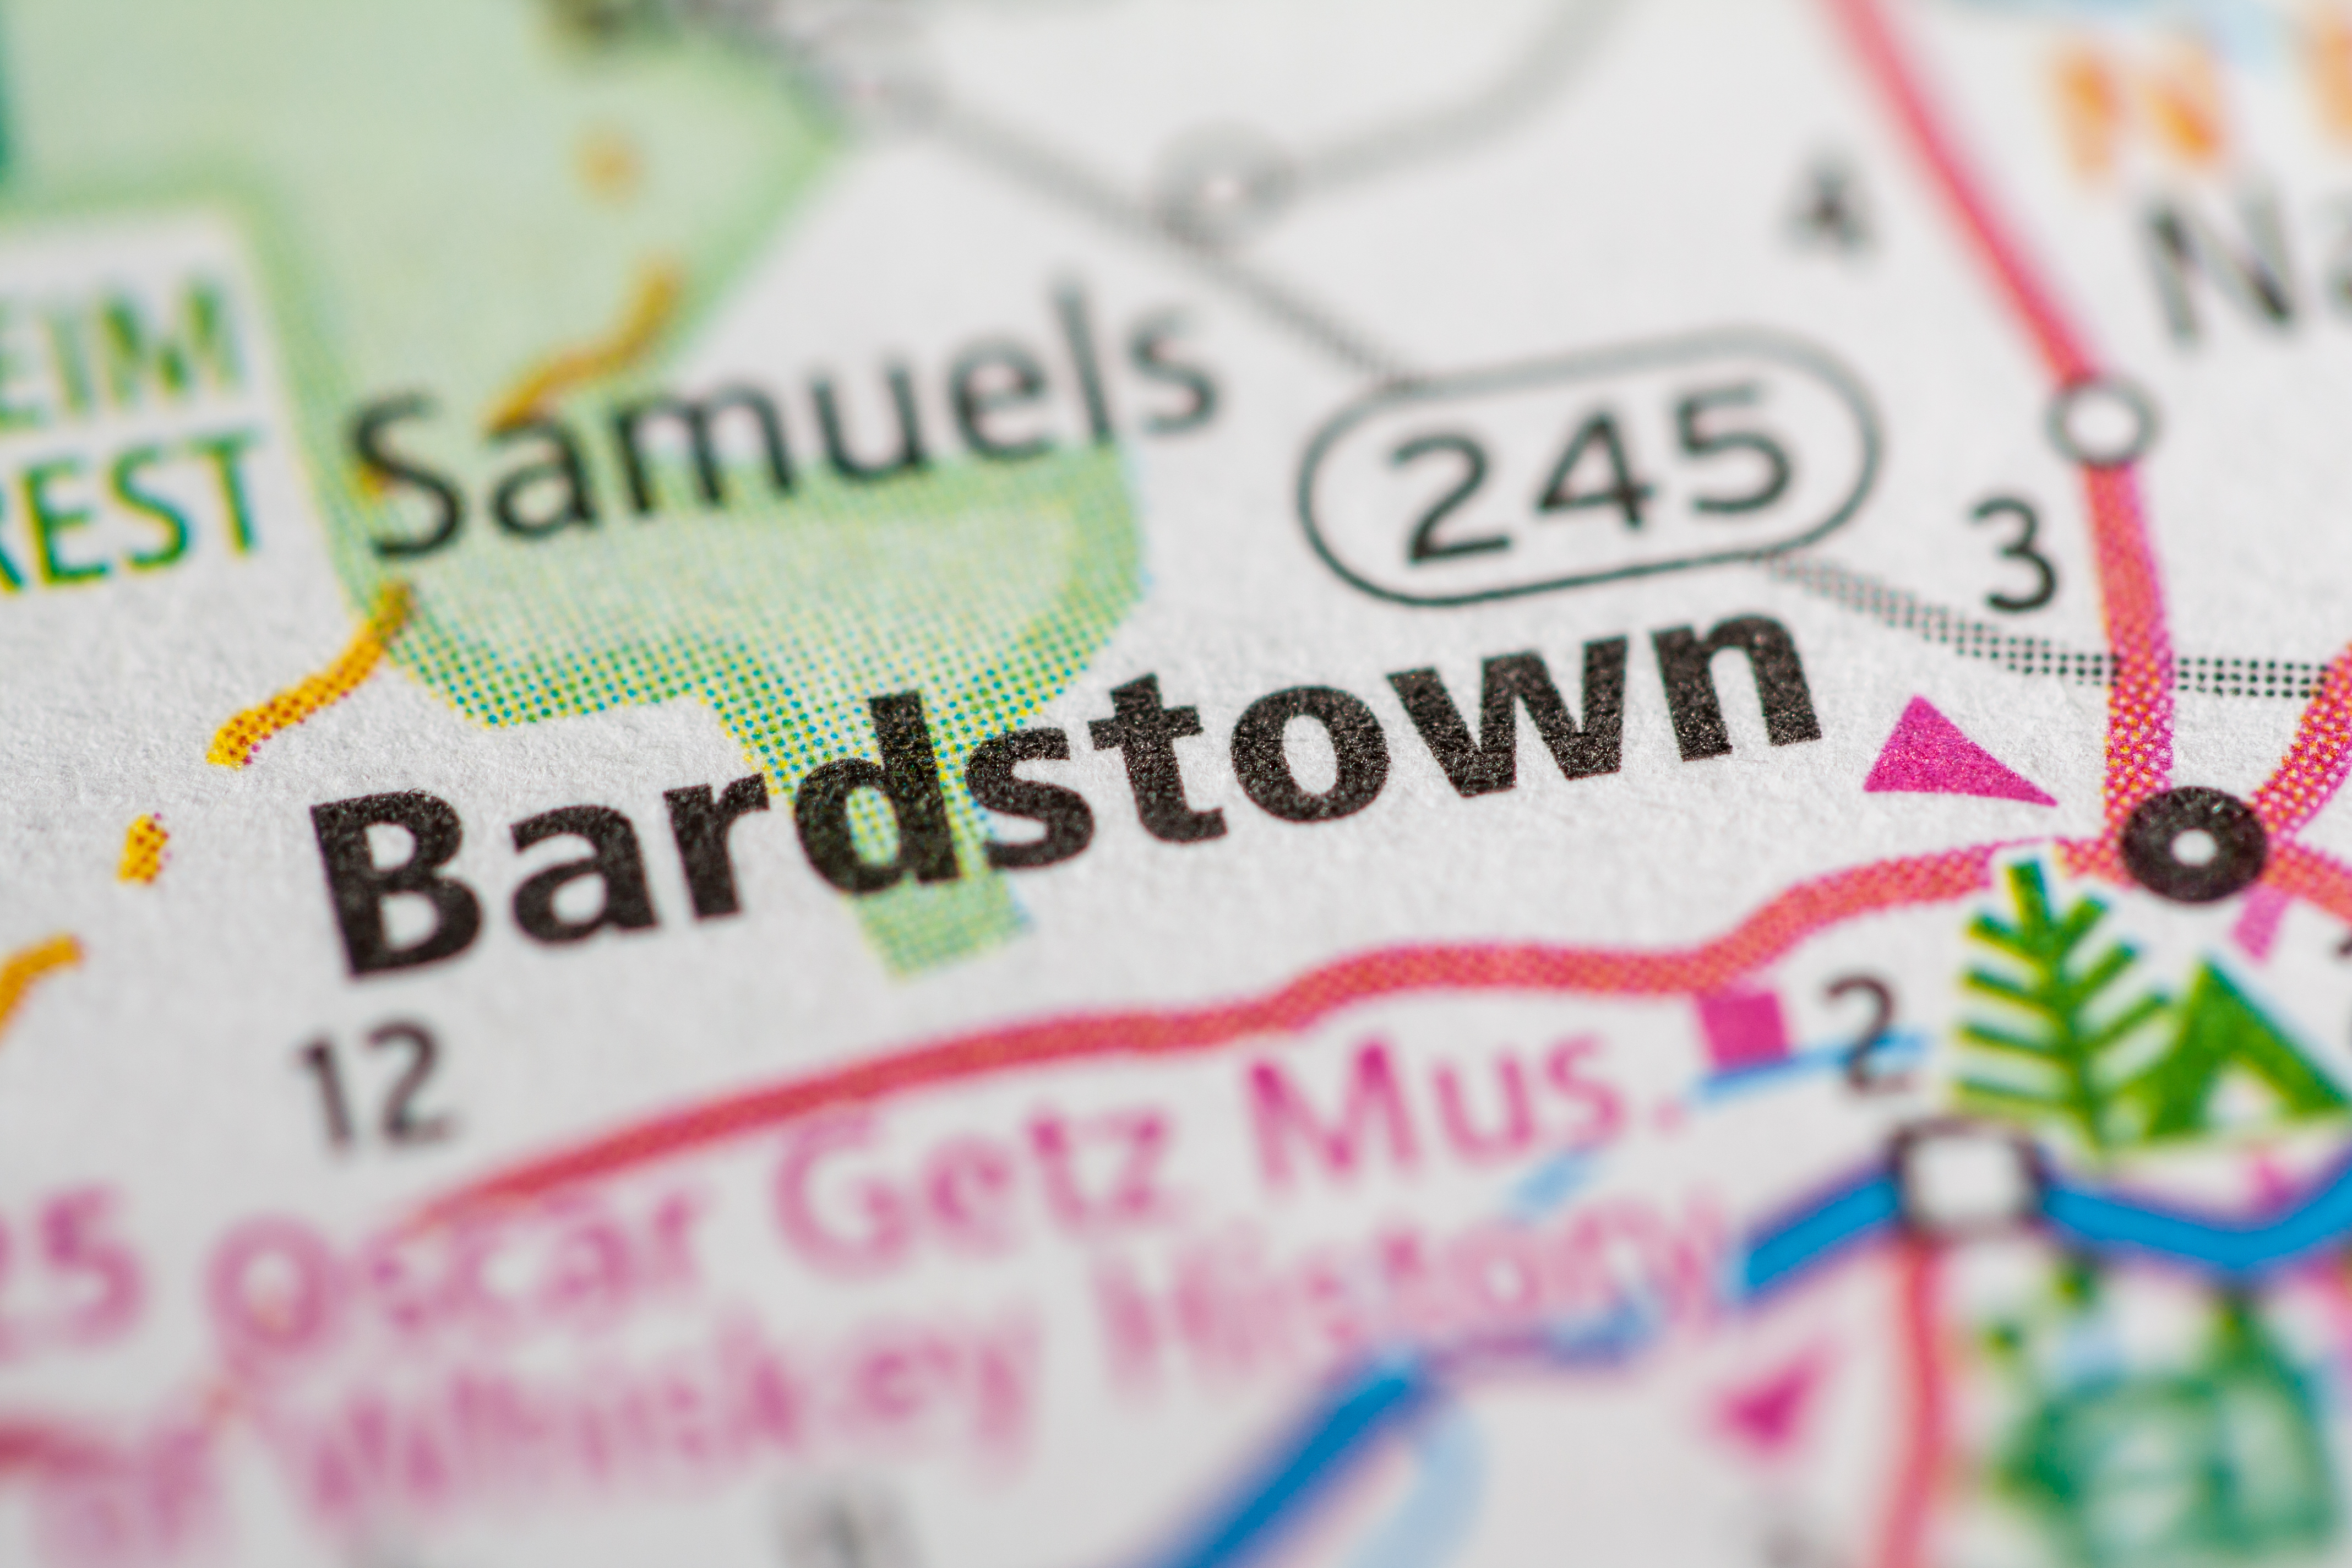 Bardstown map